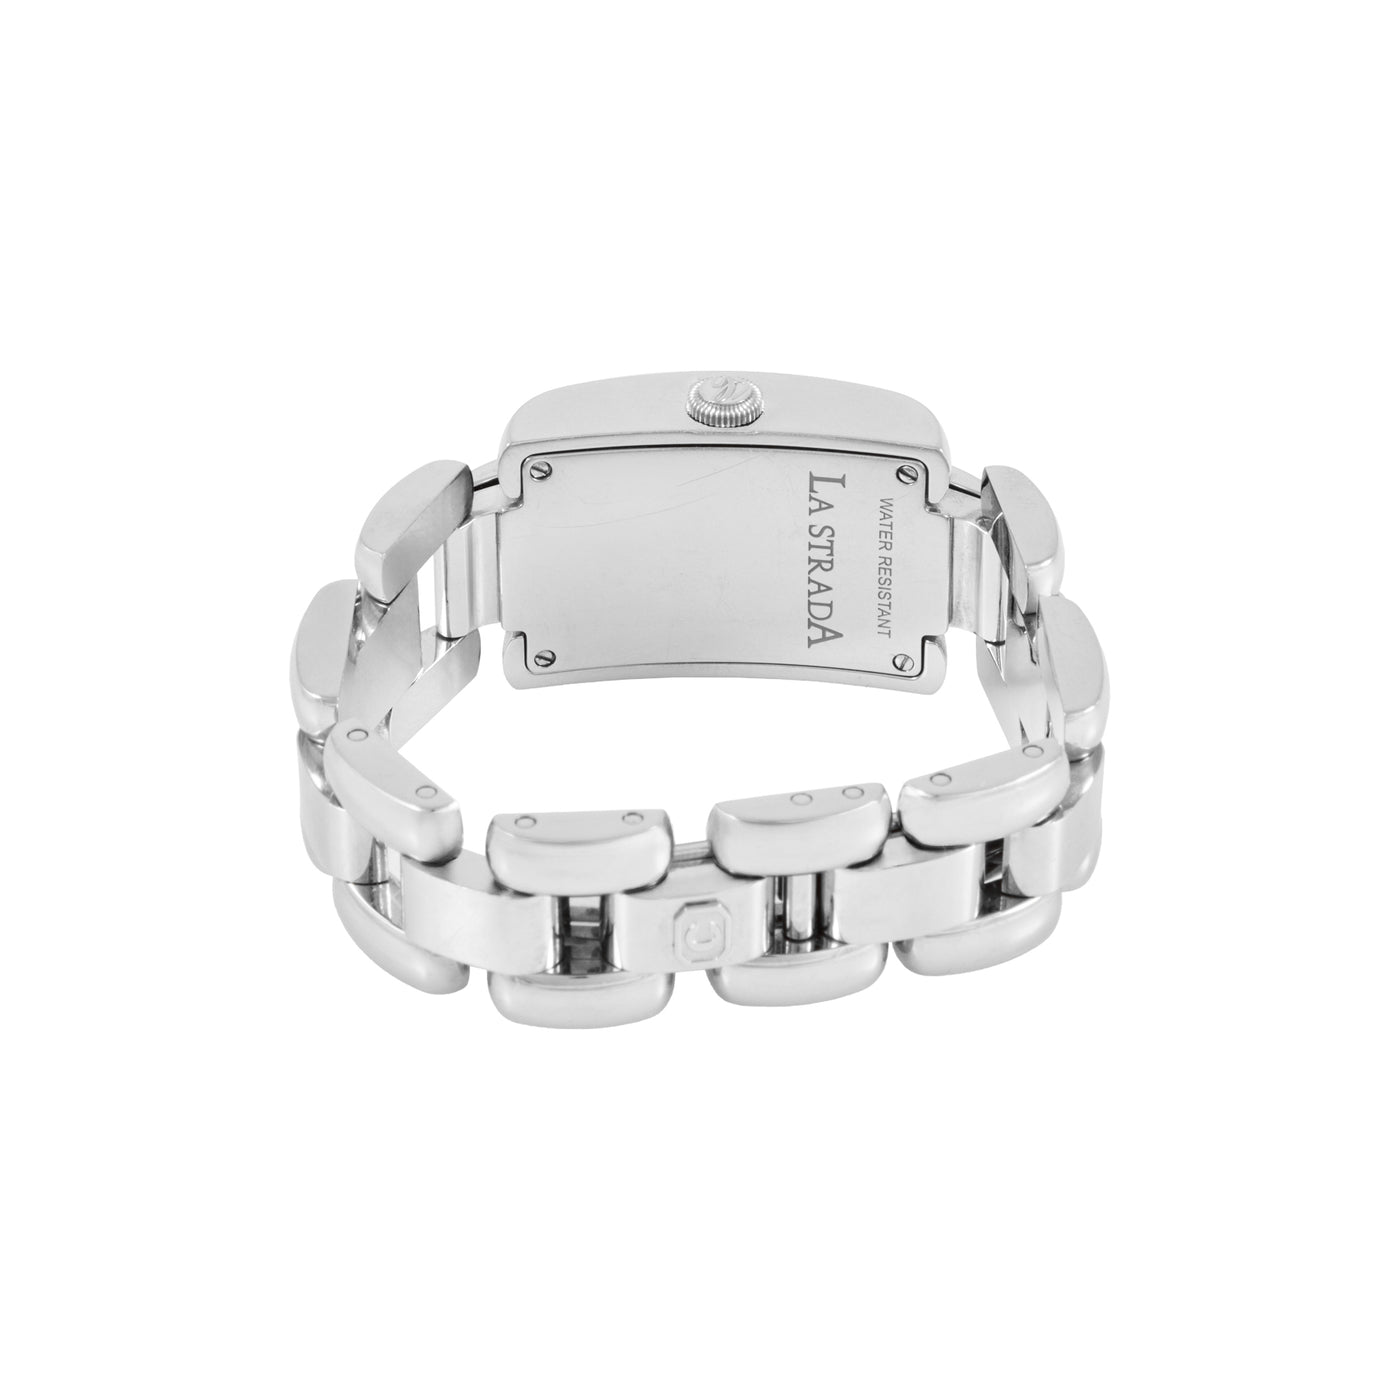 Chopard La Strada 418415-3001 | Timepiece360